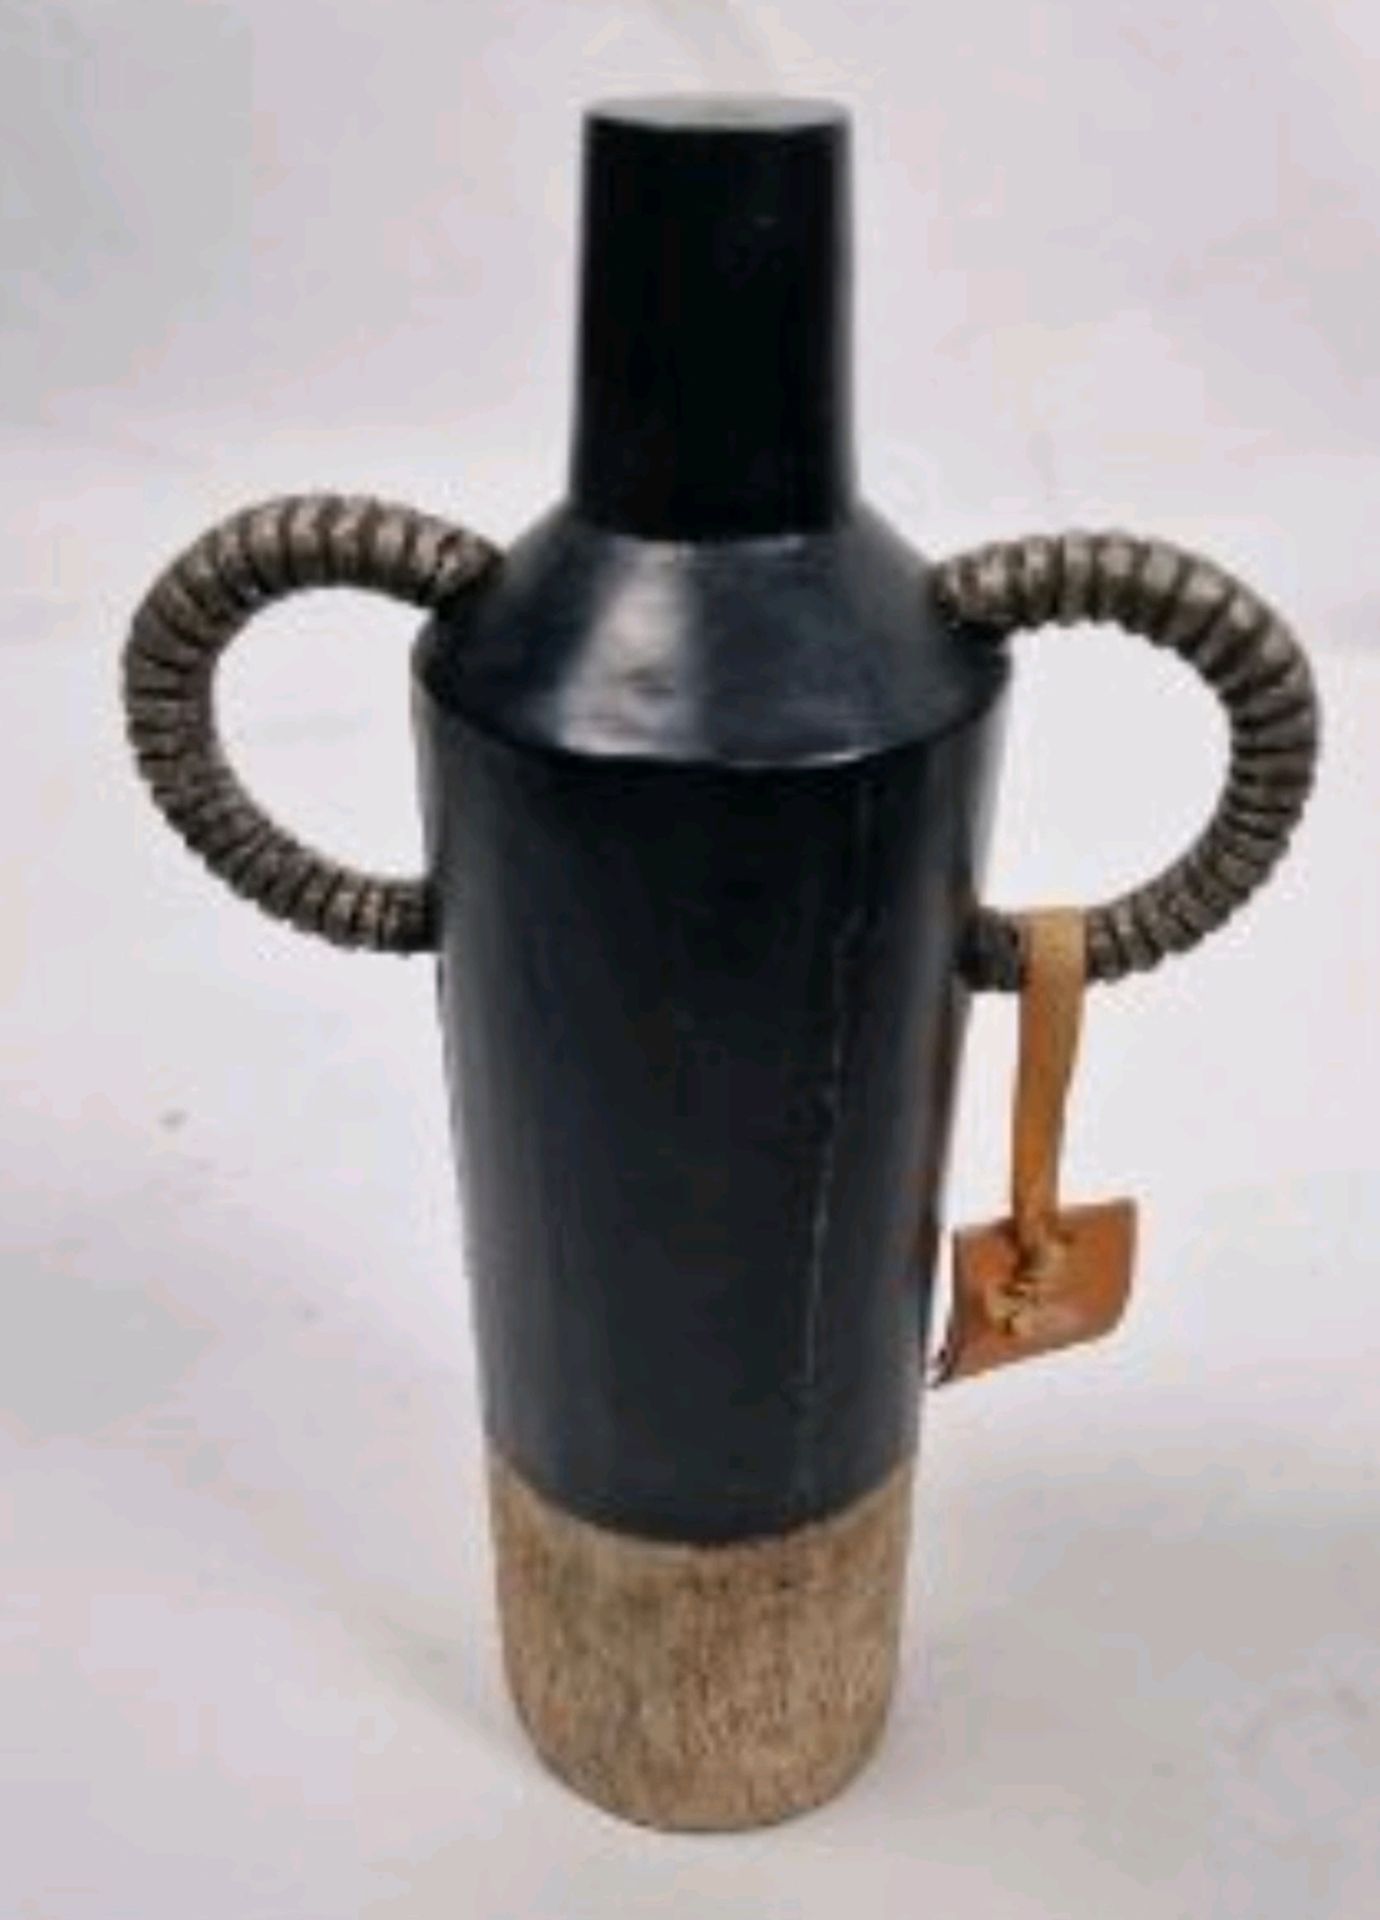 Global Explorer Bottle Object - Image 2 of 2